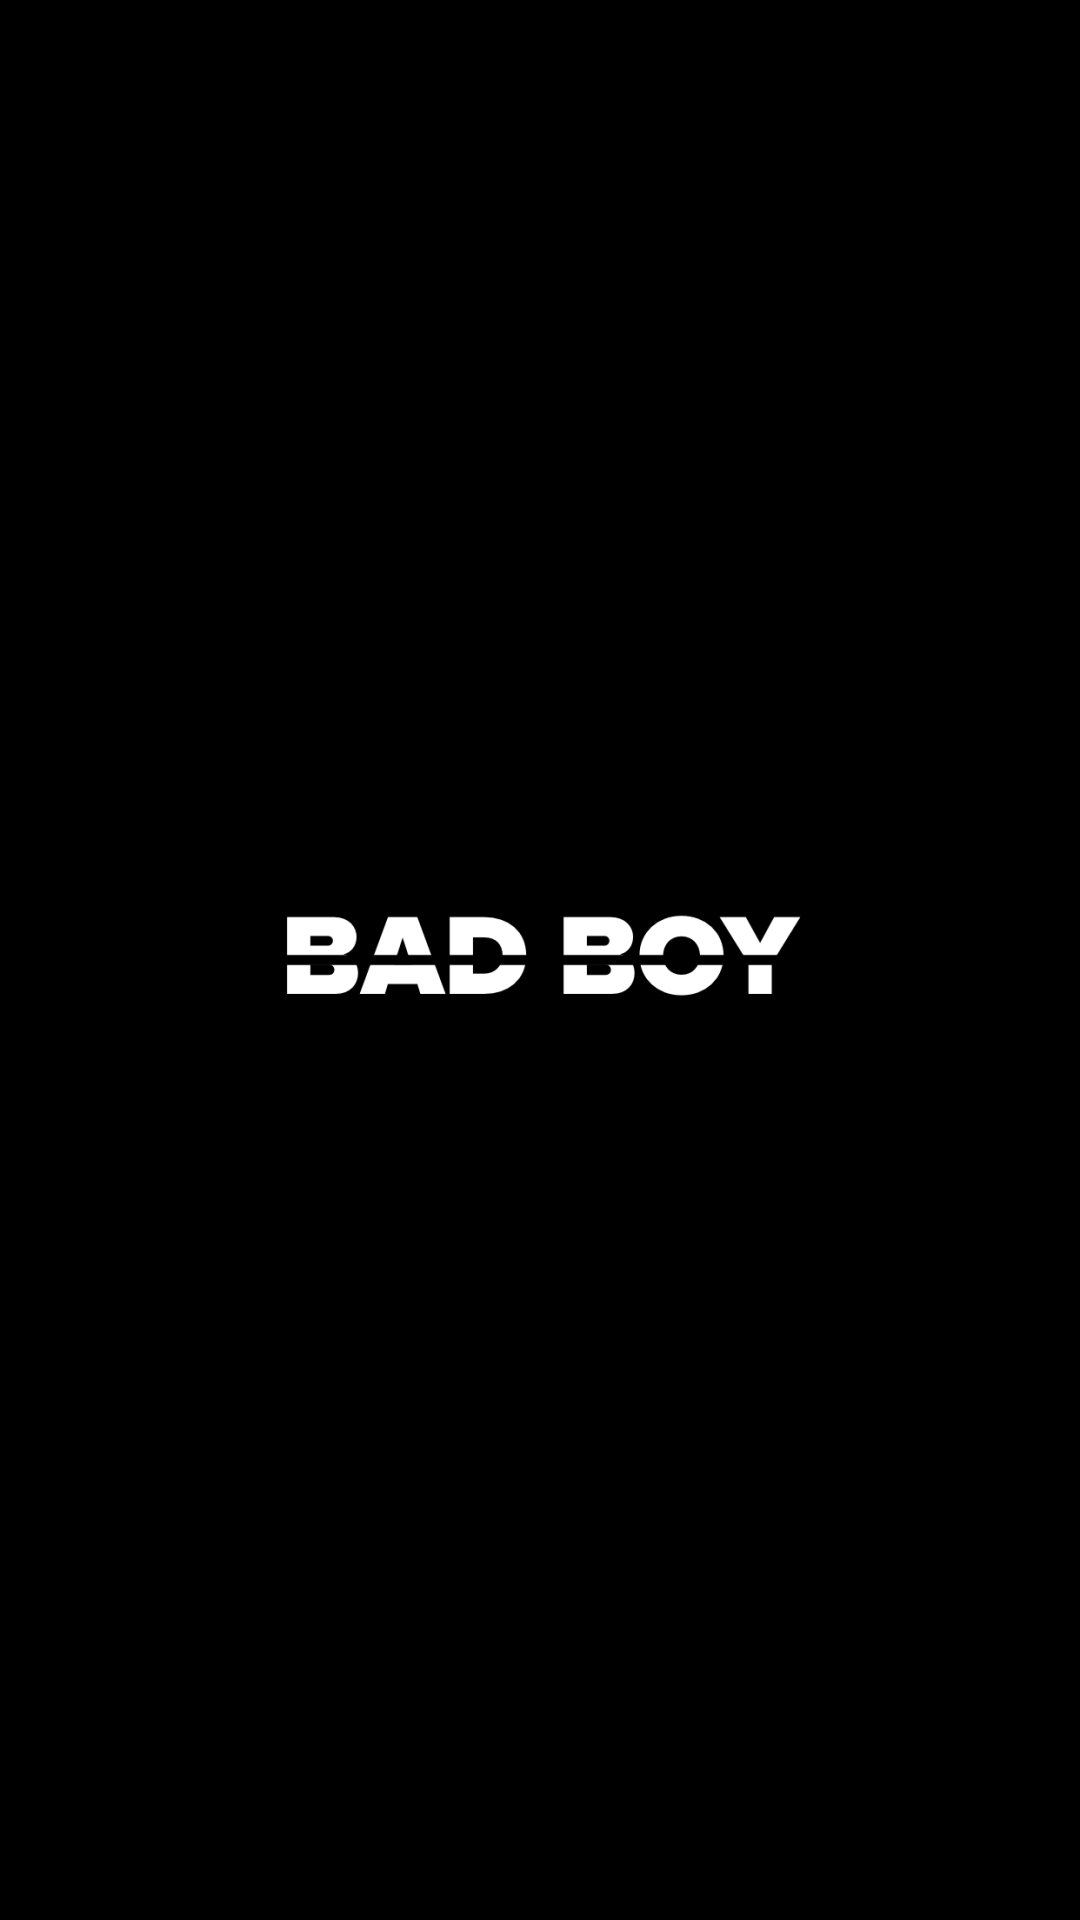 Bad boy.” Bad Boy - #REDVELVET. Boys wallpaper, Bad boys